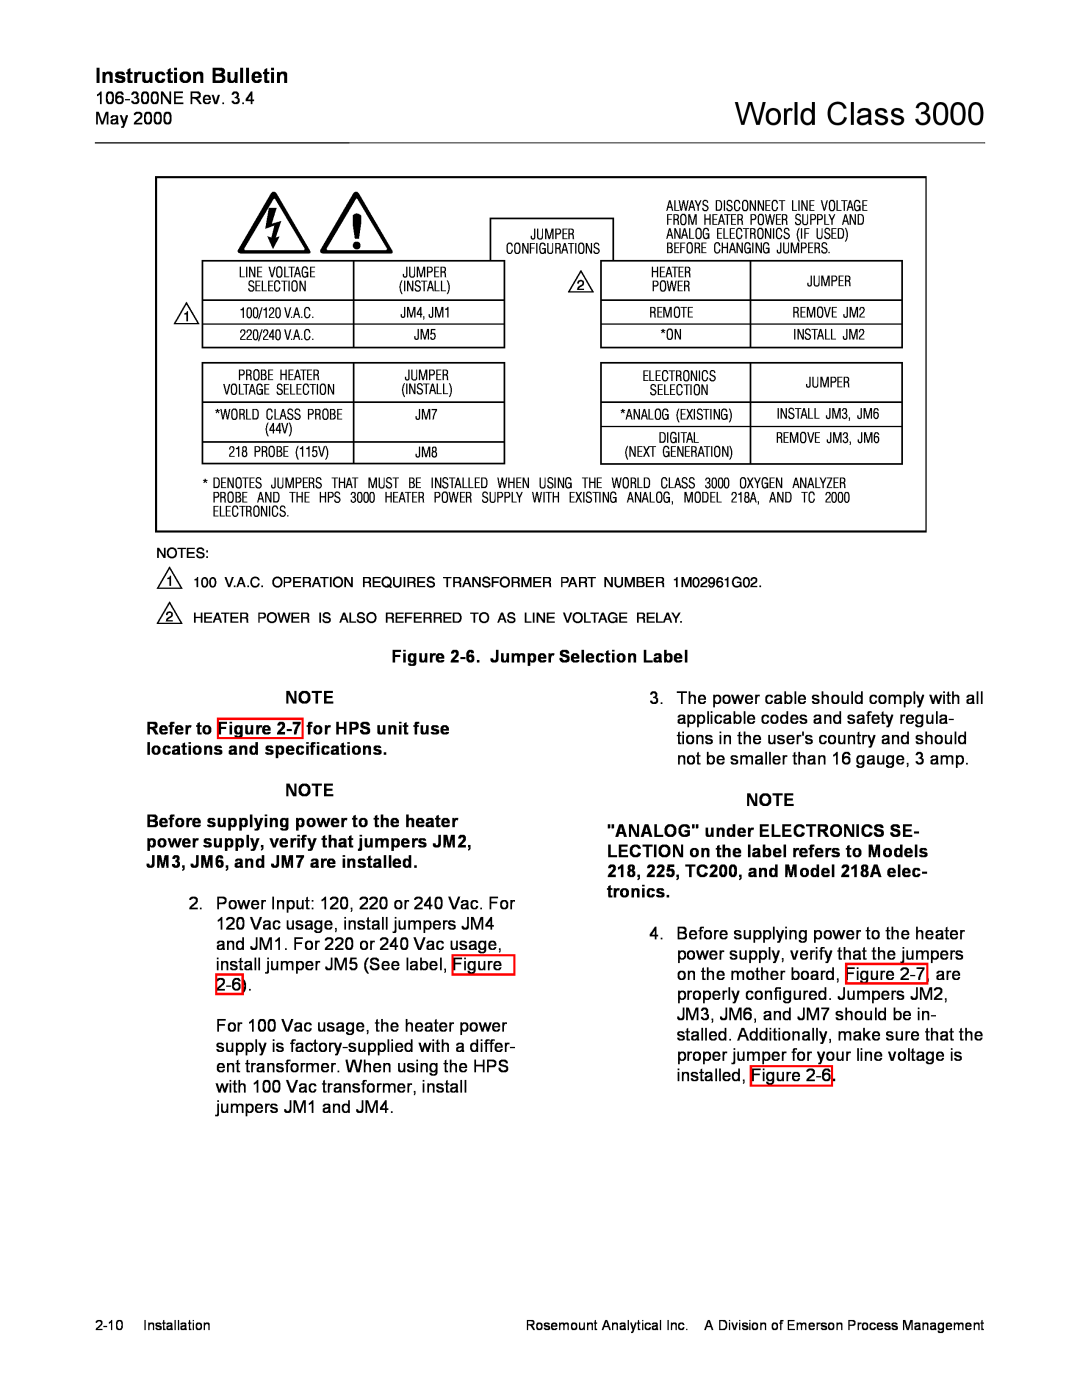 Emerson 3000 manual Instruction Bulletin, 6.Jumper Selection Label 